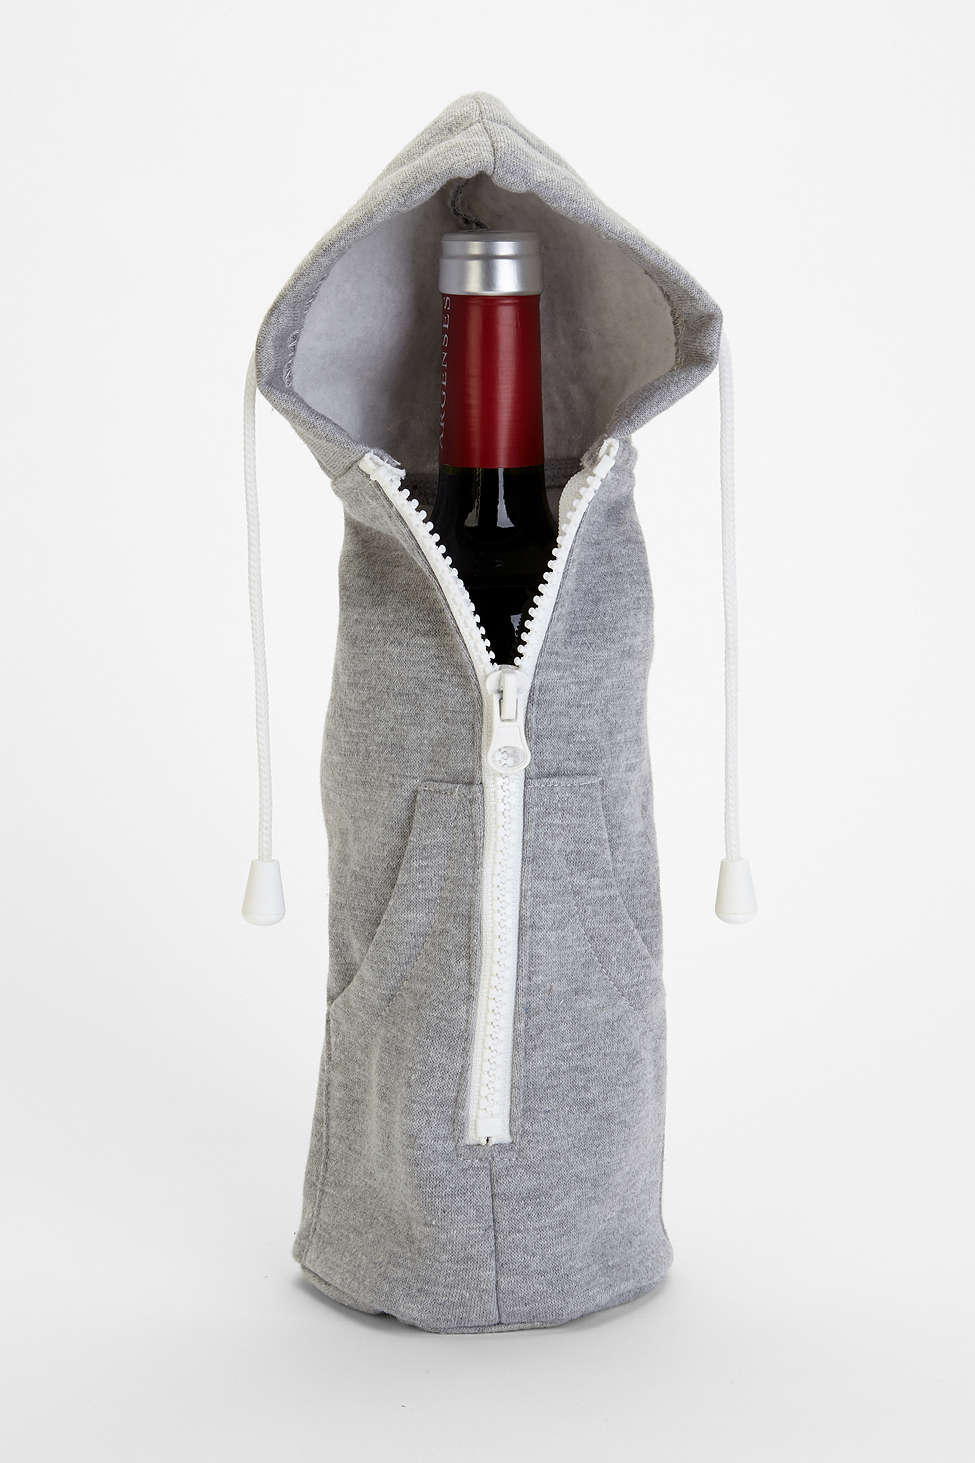 Urban Outfitters Zip it Up Wine Bottle Hoodie - $20